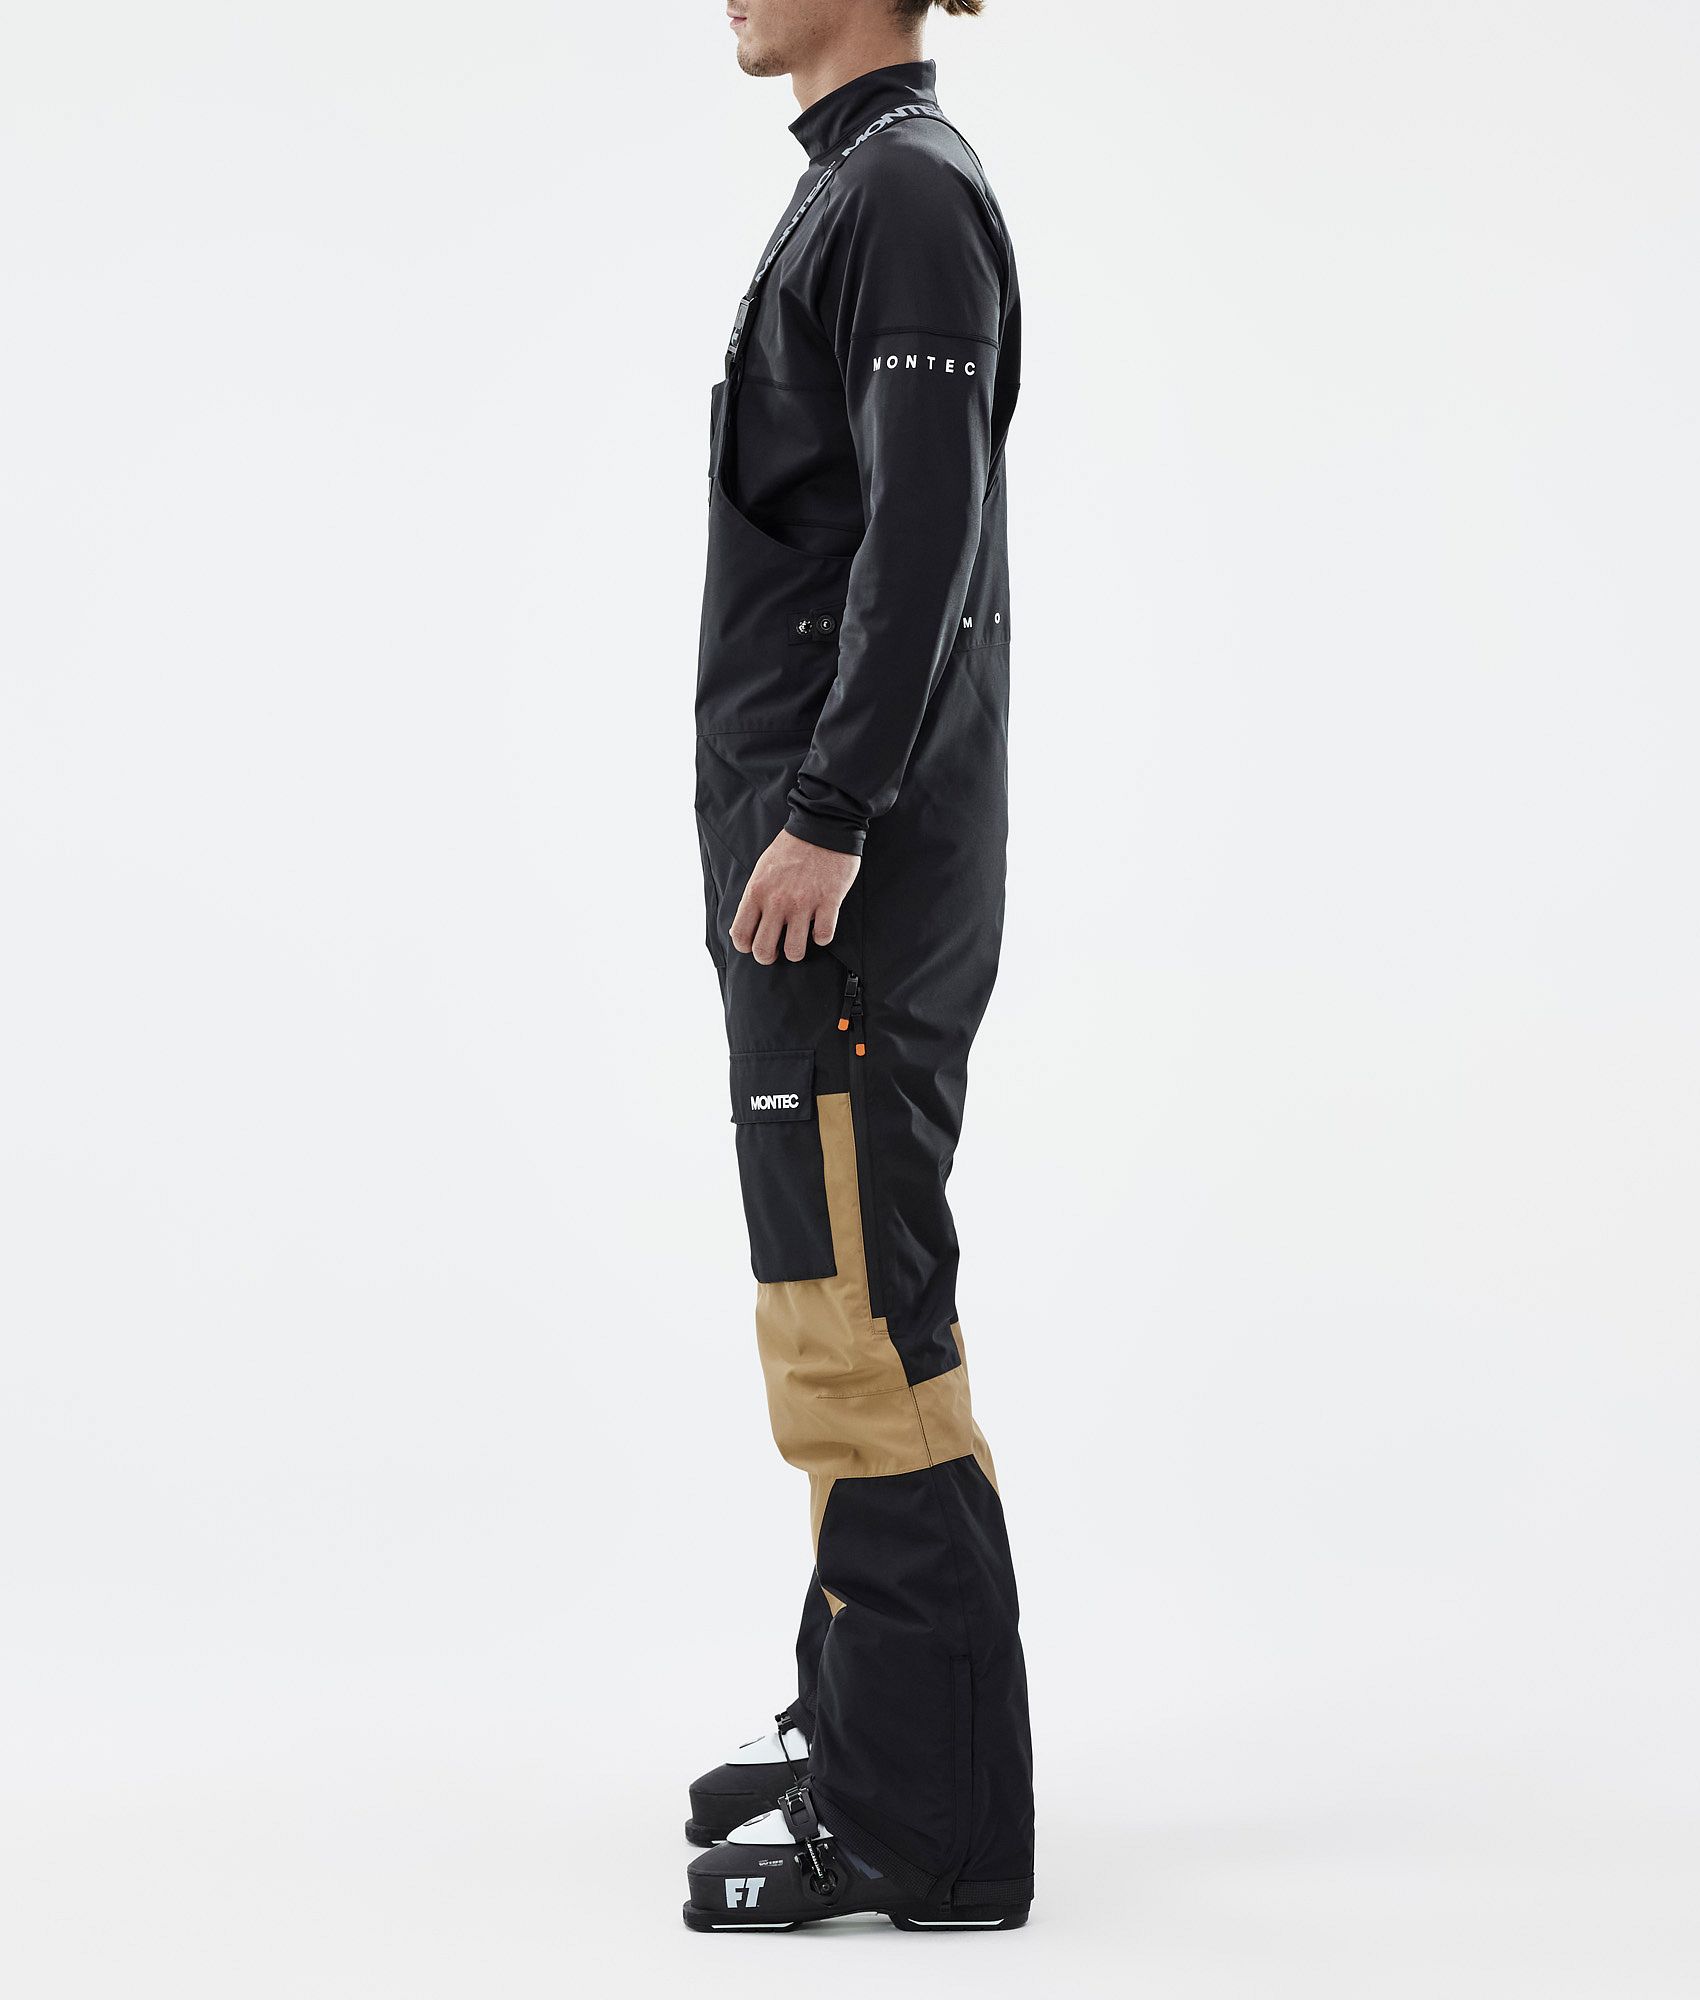 Montec Fawk Men's Snowboard Pants Gold